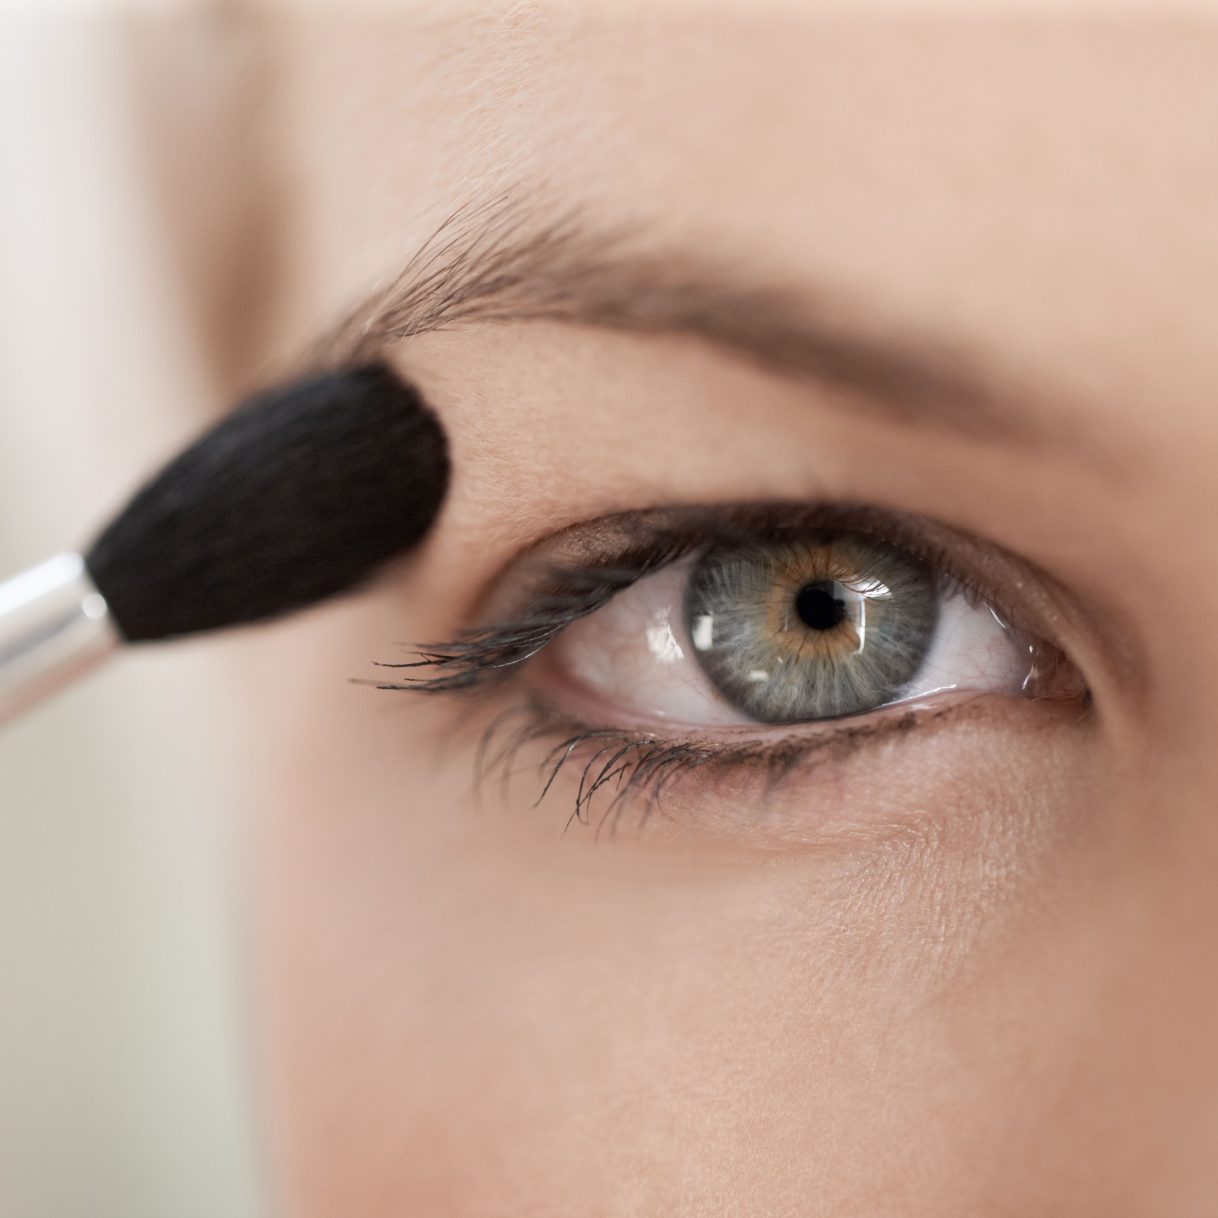 Heavy Eye Makeup Makeup Tricks For Hooded Eyes Hooded Eyes Makeup Tips And Tricks